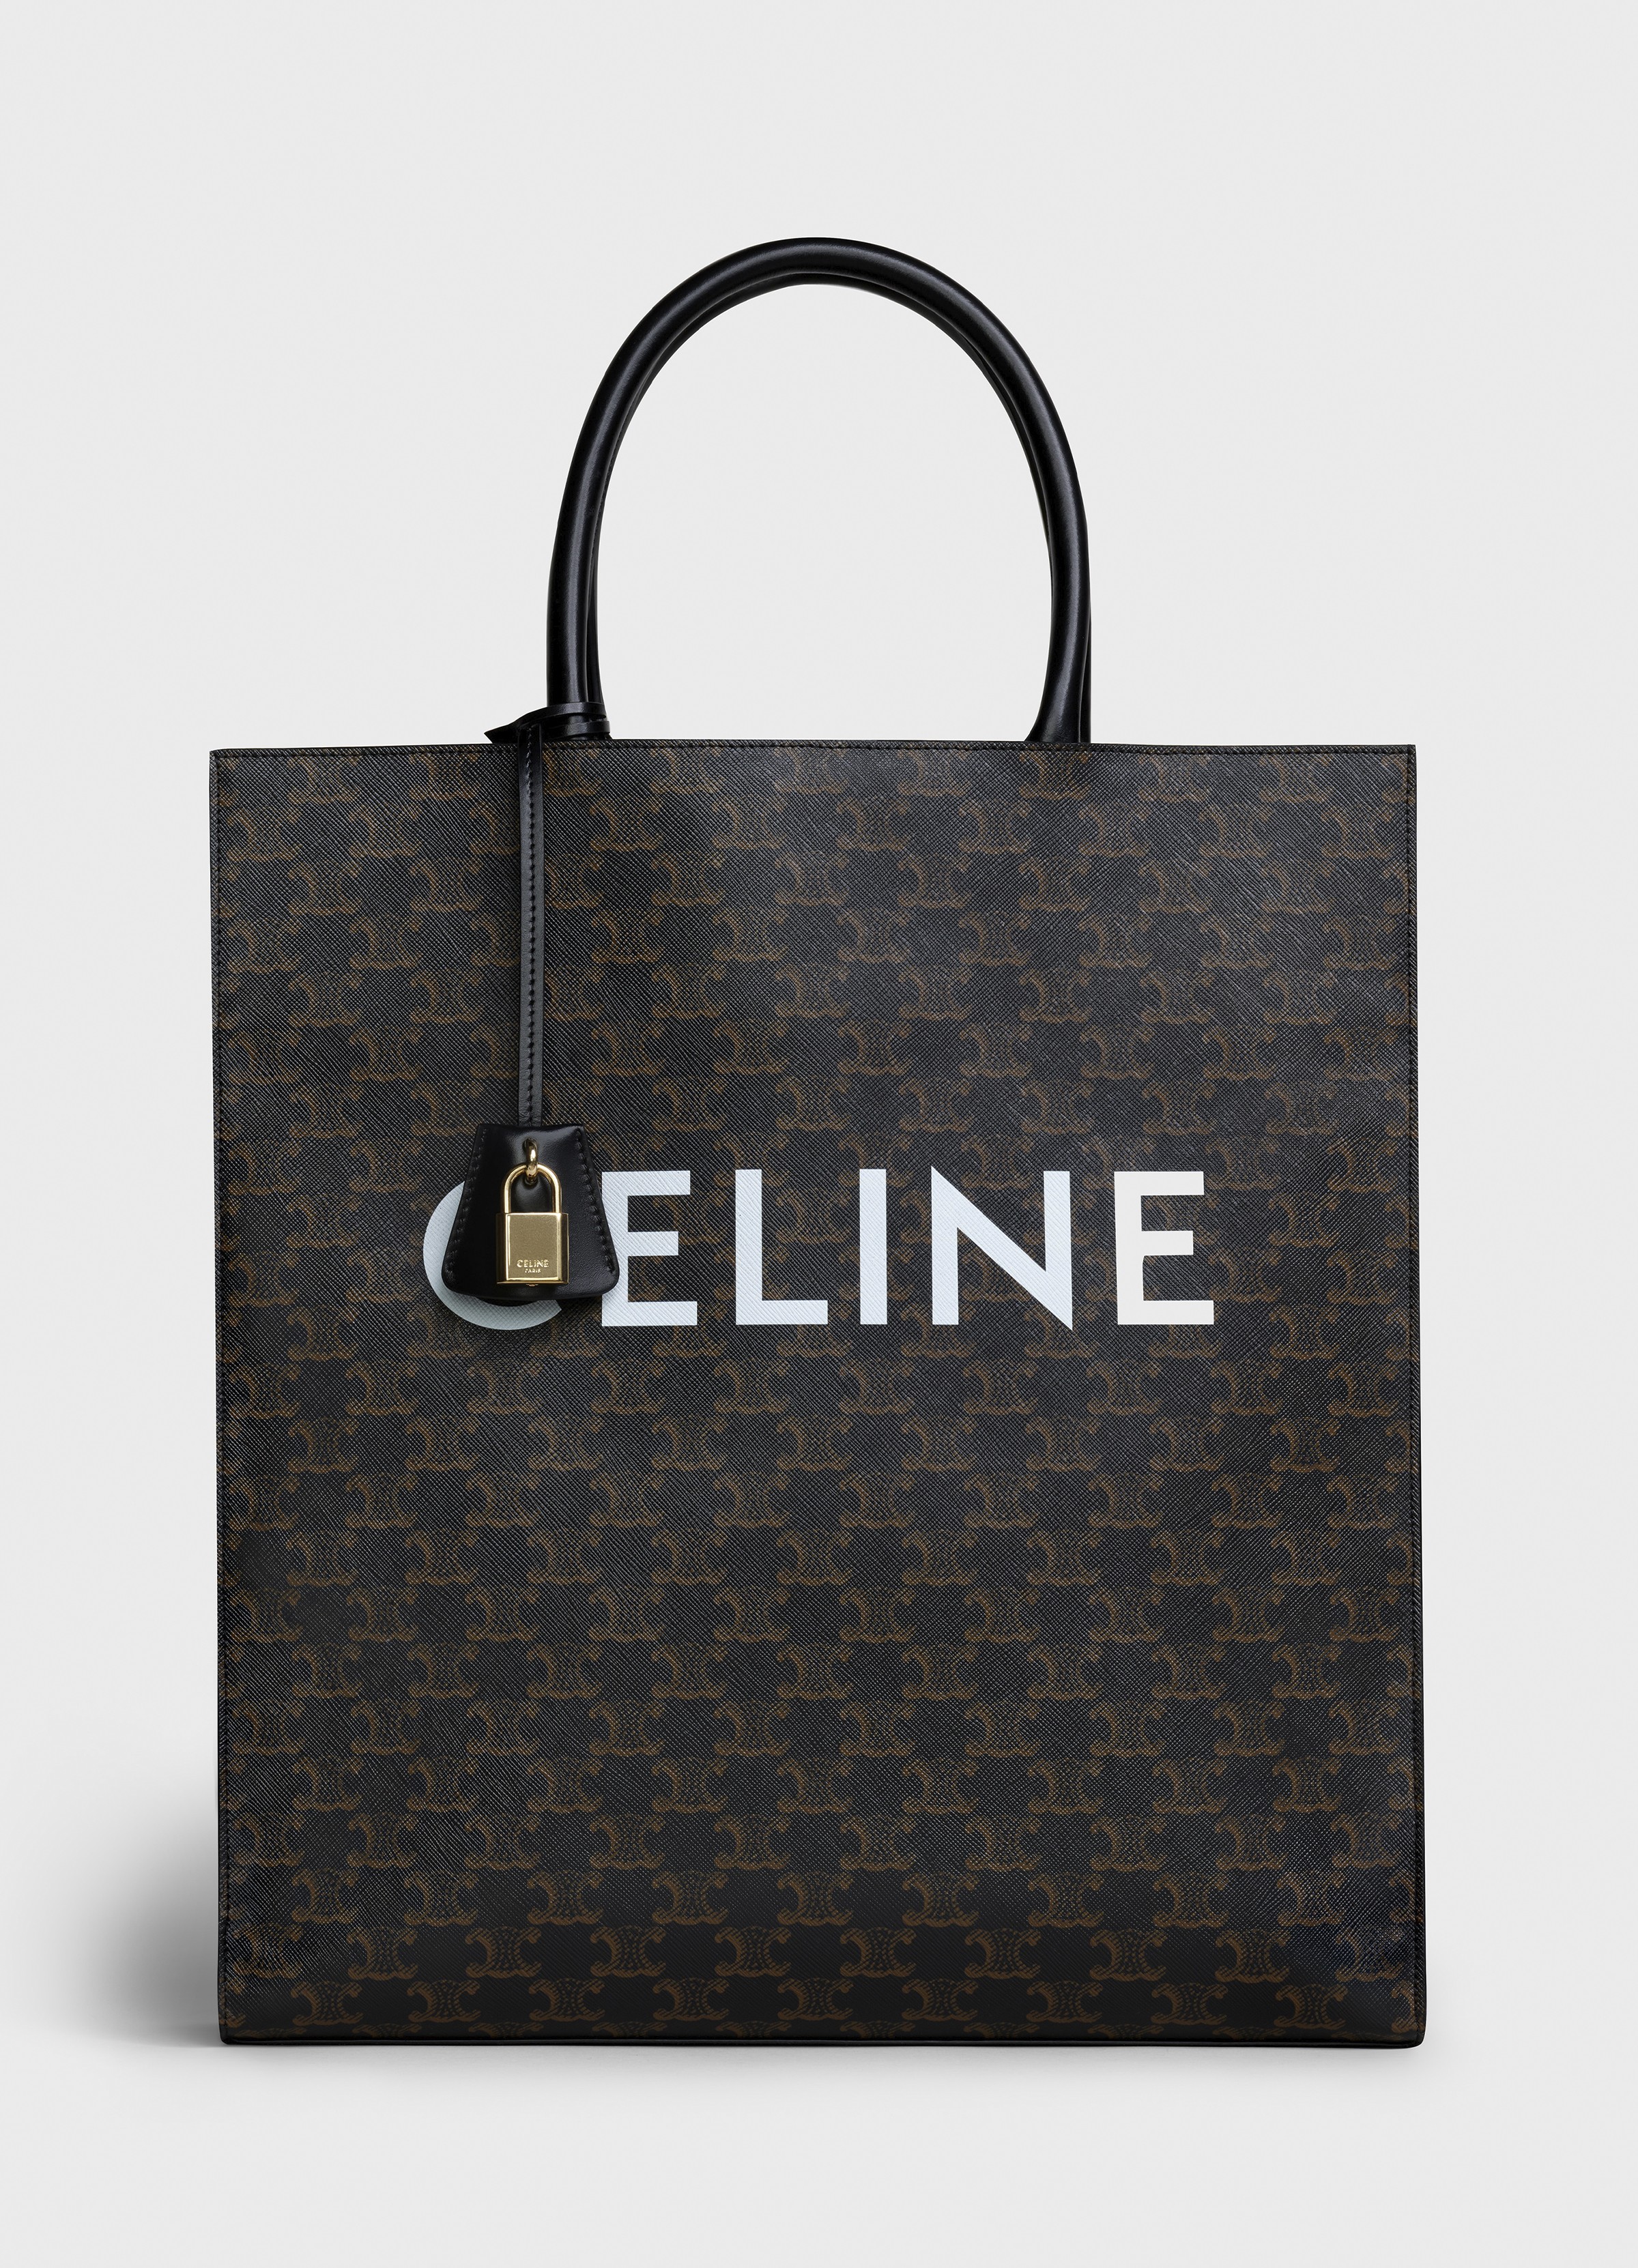 new celine bag 2019